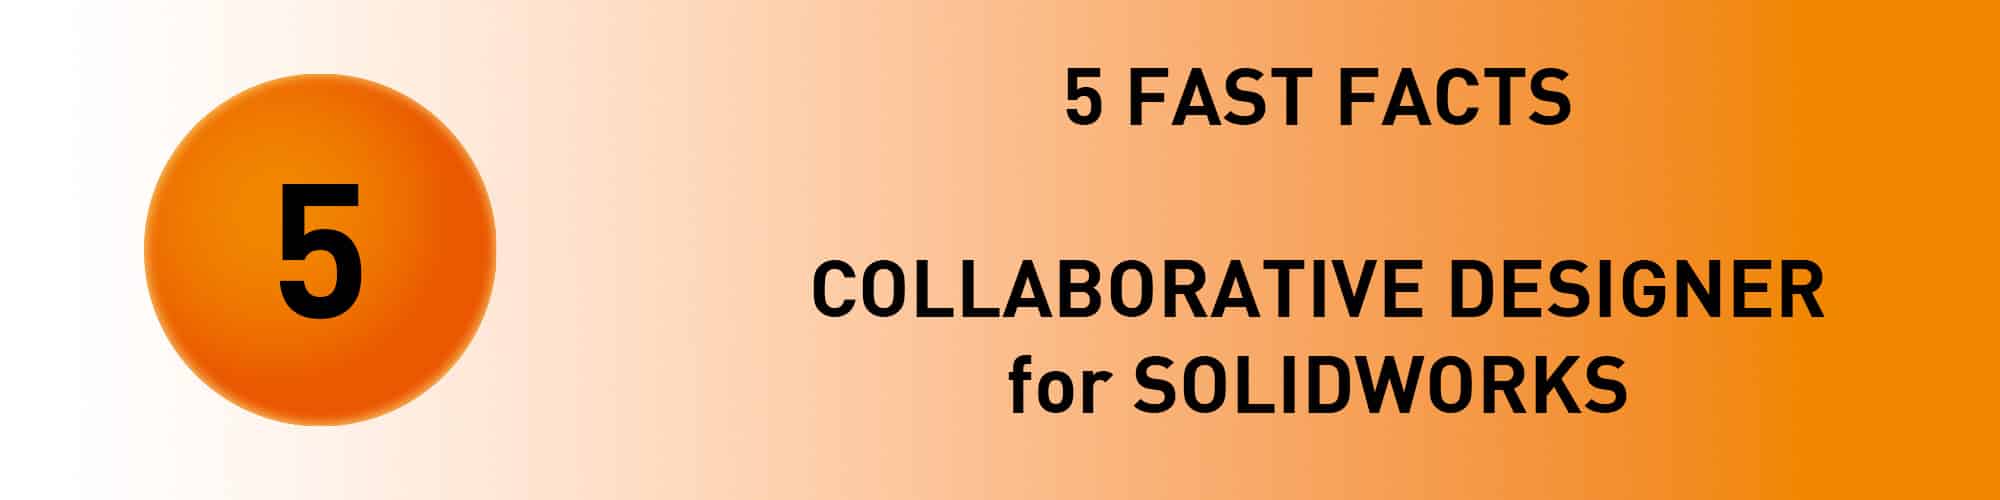 5 FAST FACTS: Collaborative Designer for SOLIDWORKS